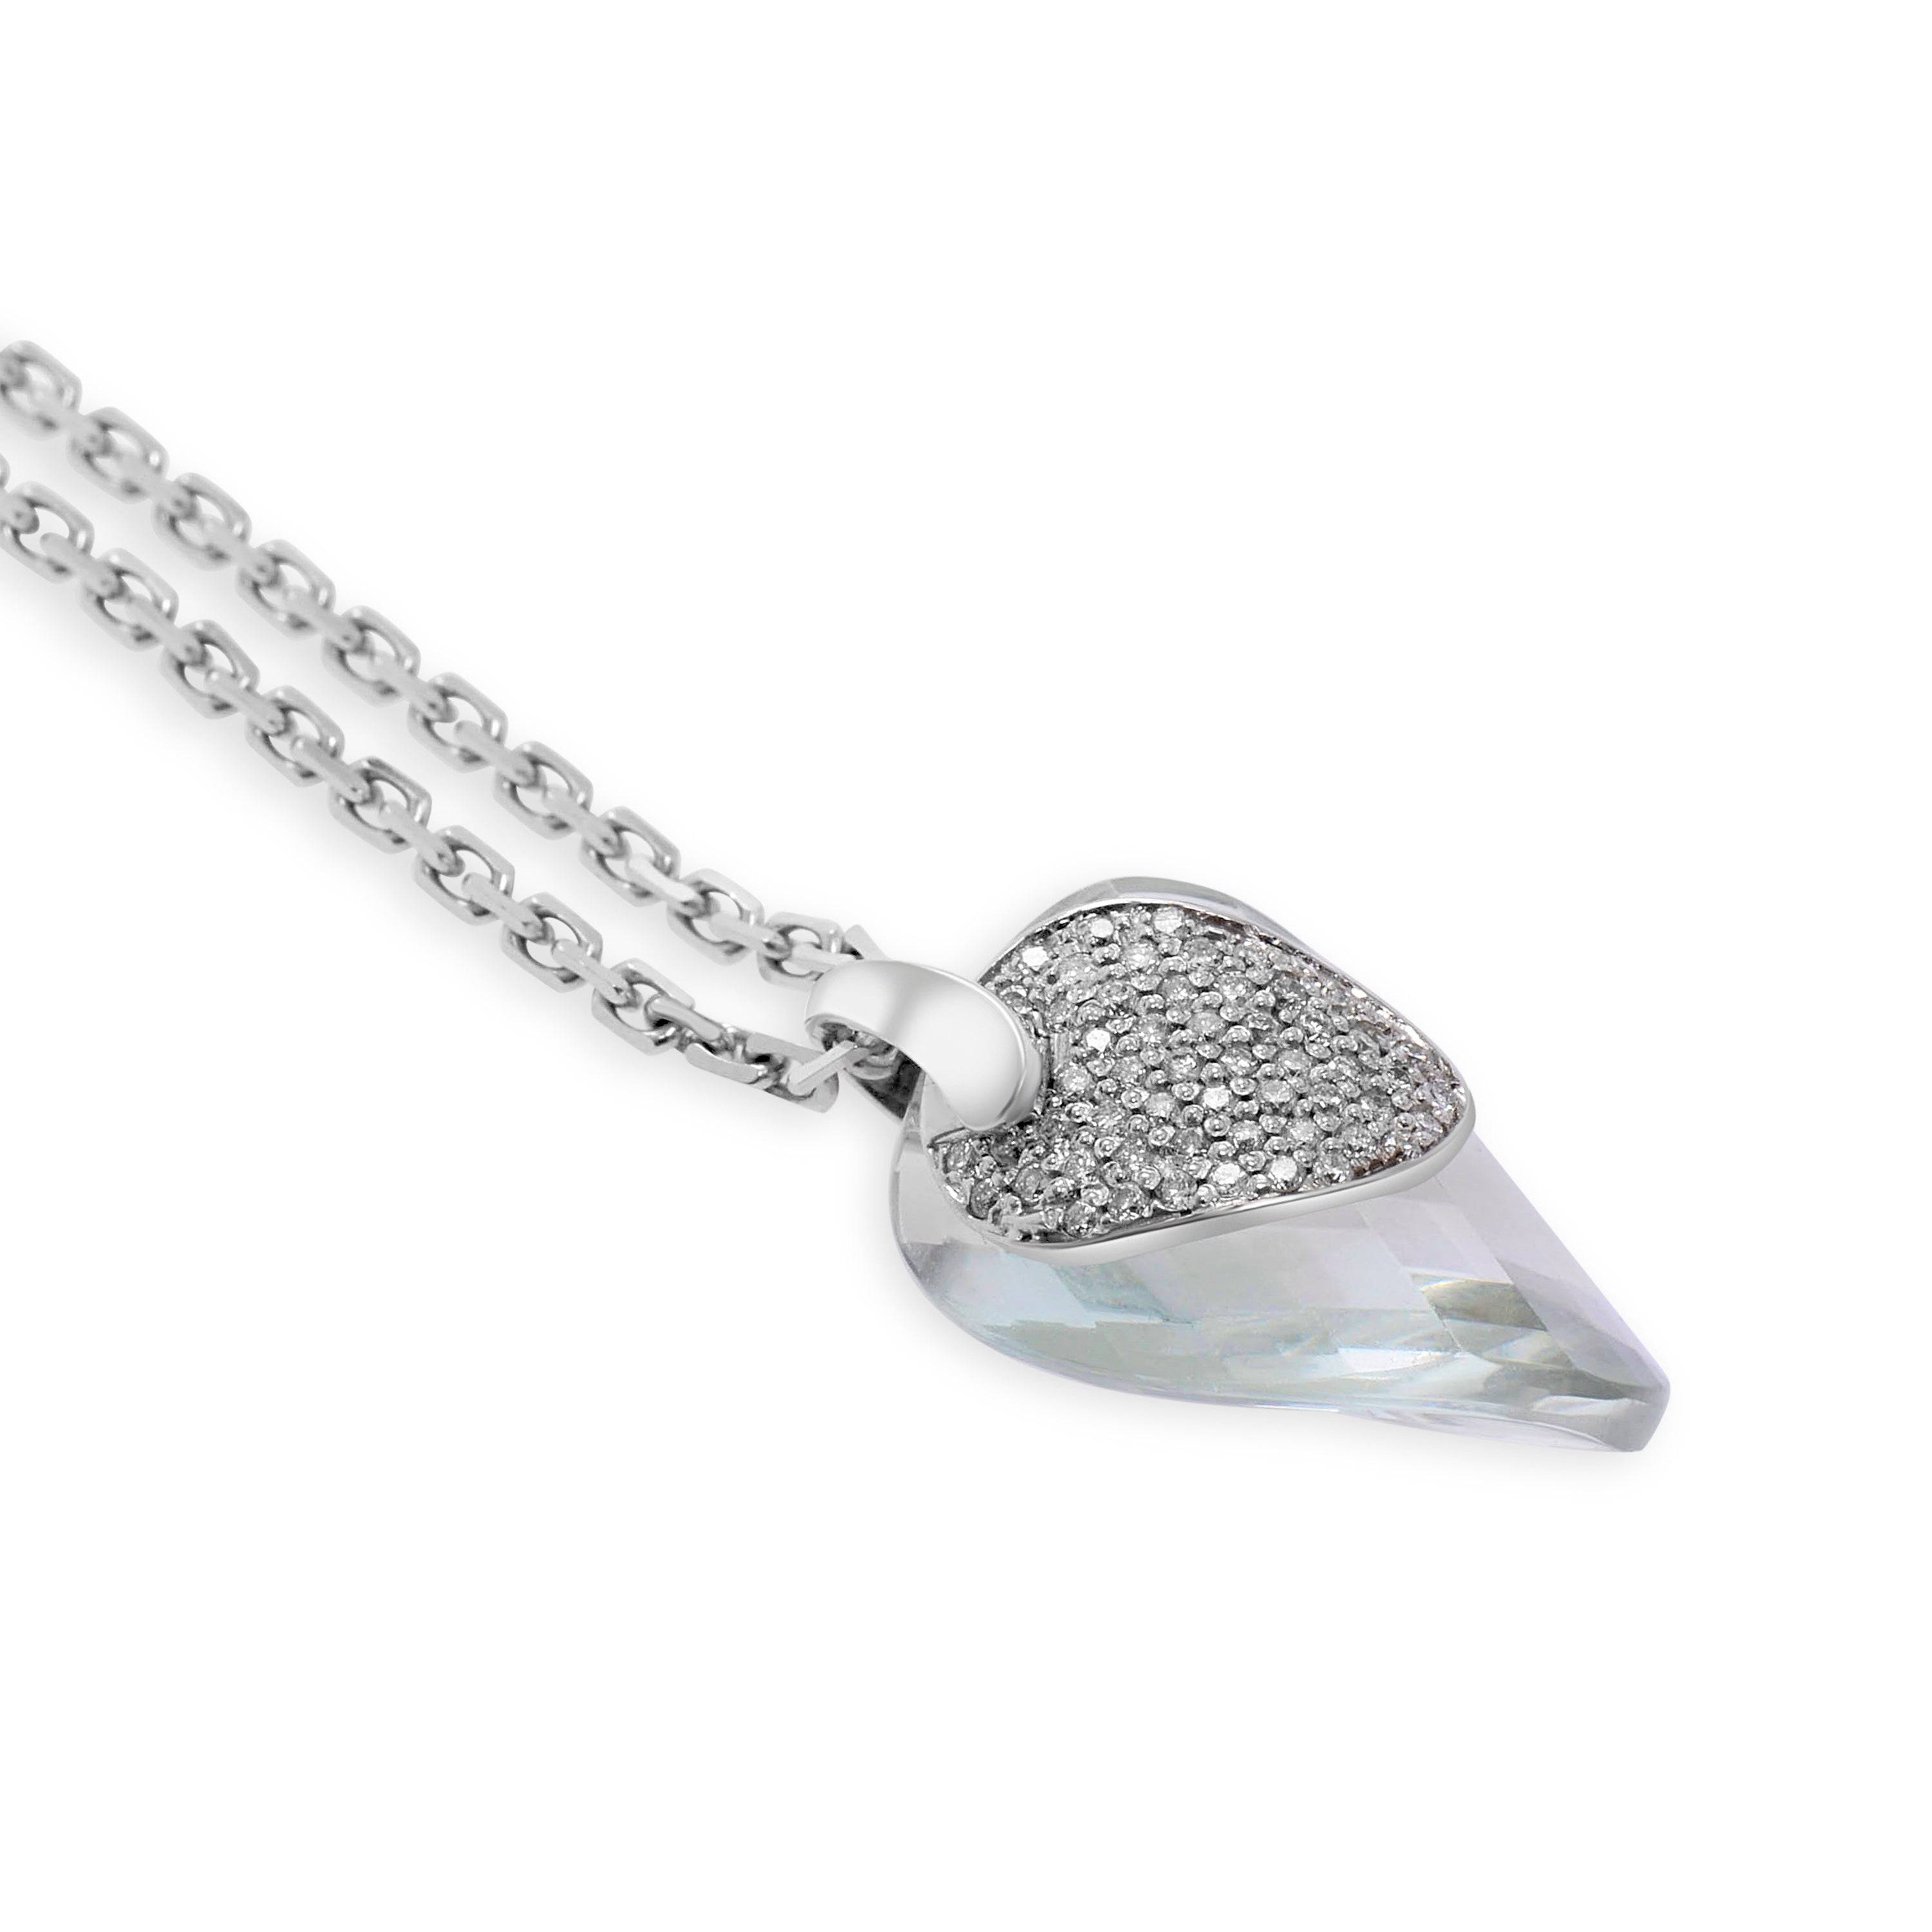 SuperOro 18K White Gold, Diamond and Prasiolite Pendant Necklace - ShopWorn